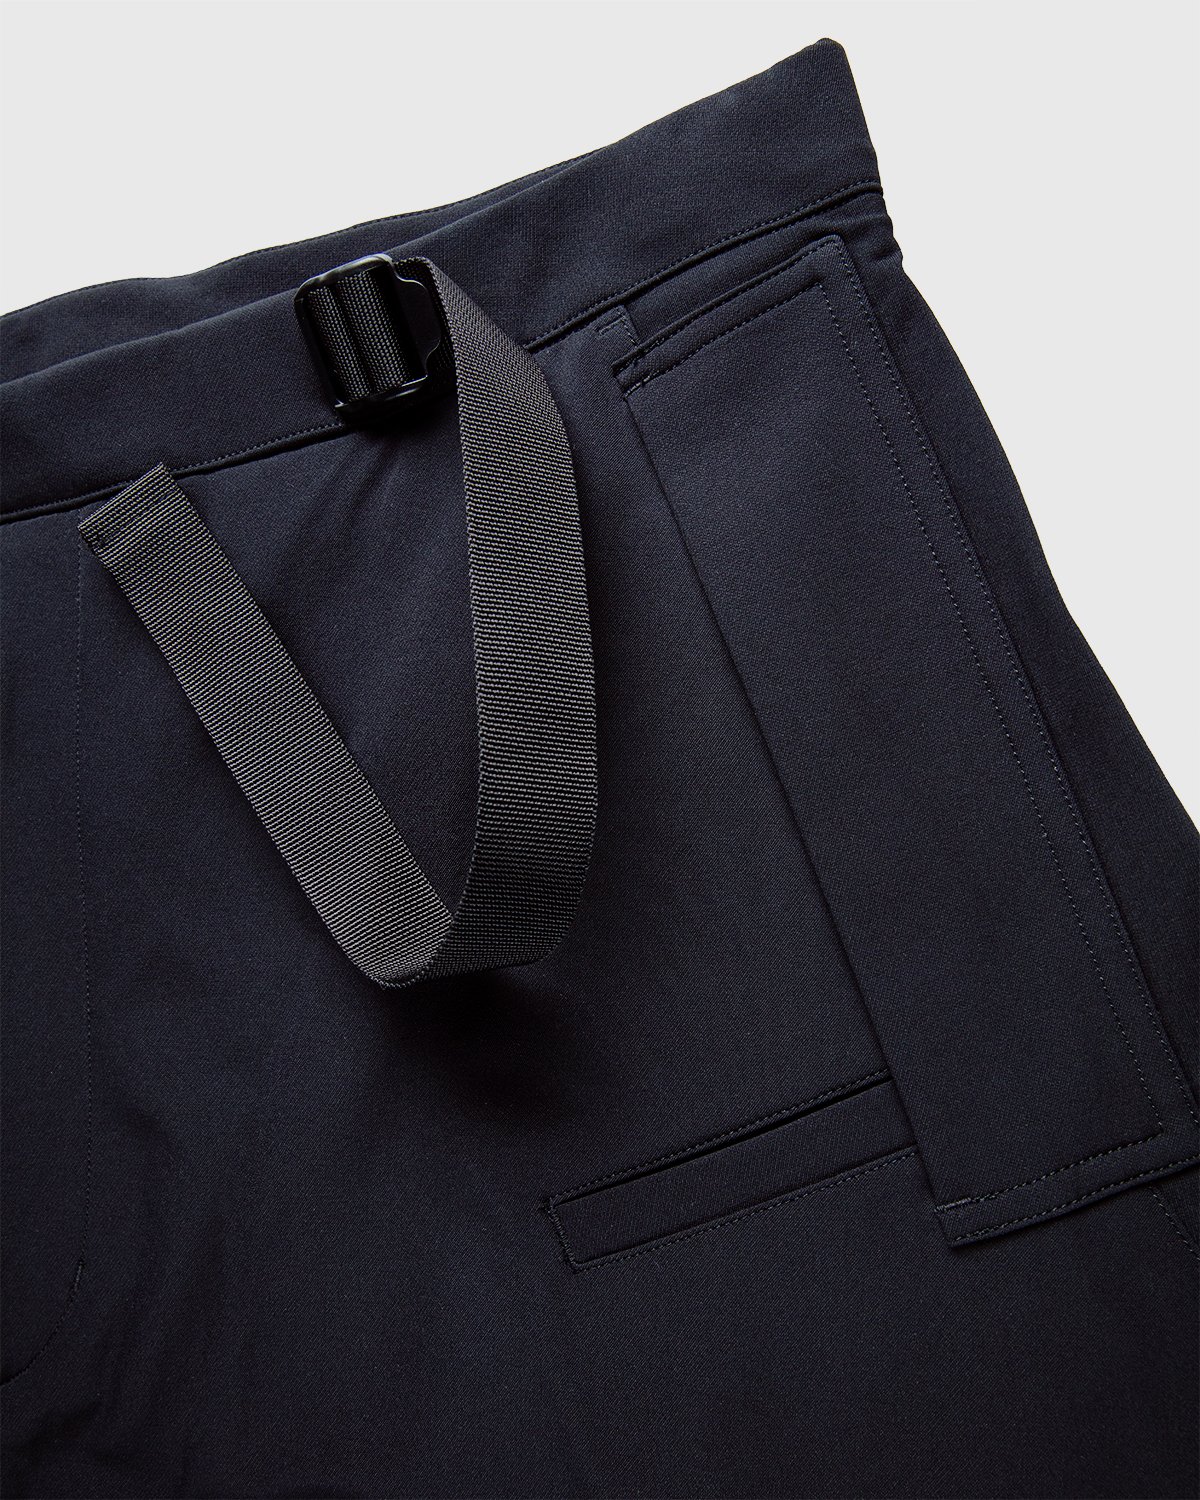 ACRONYM - SP28-DS Pants Black - Clothing - Black - Image 6